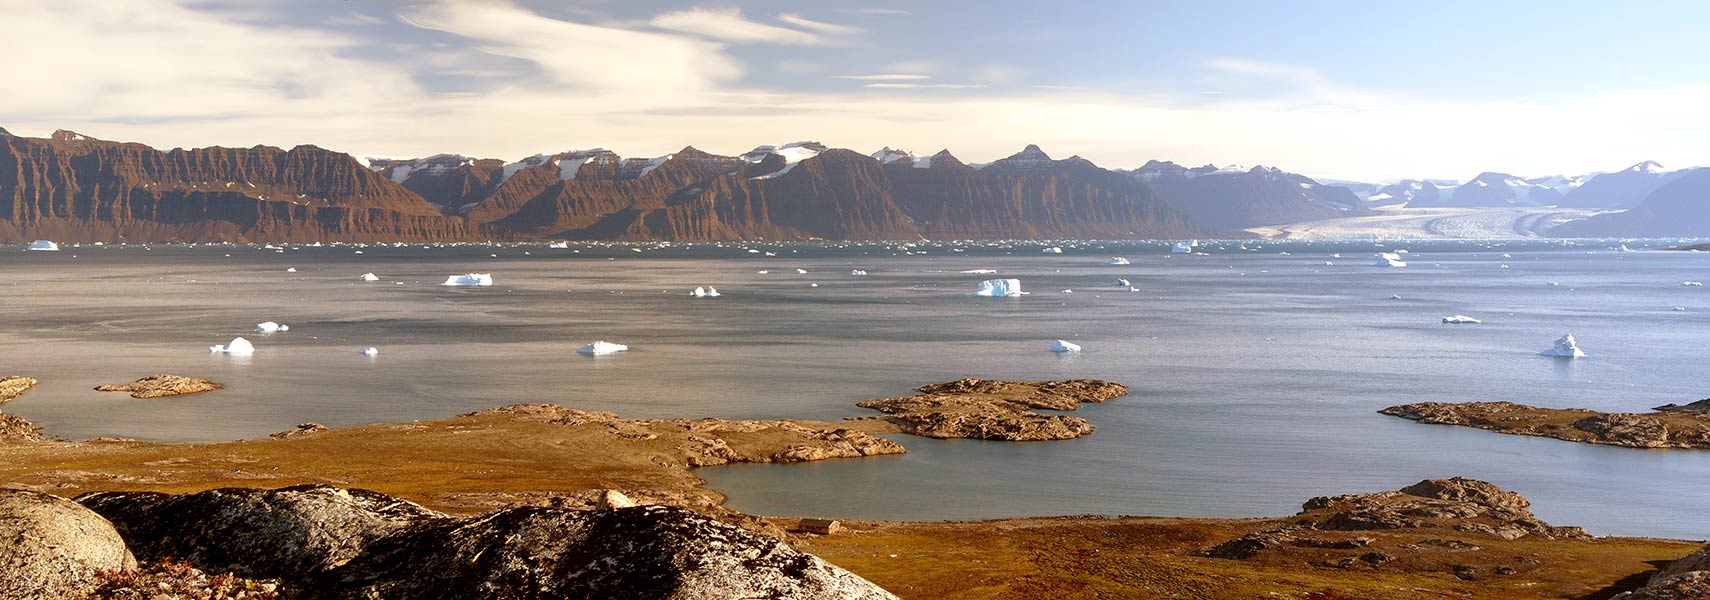 Scoresby Sound fjord, Greenland Sea, Greenland